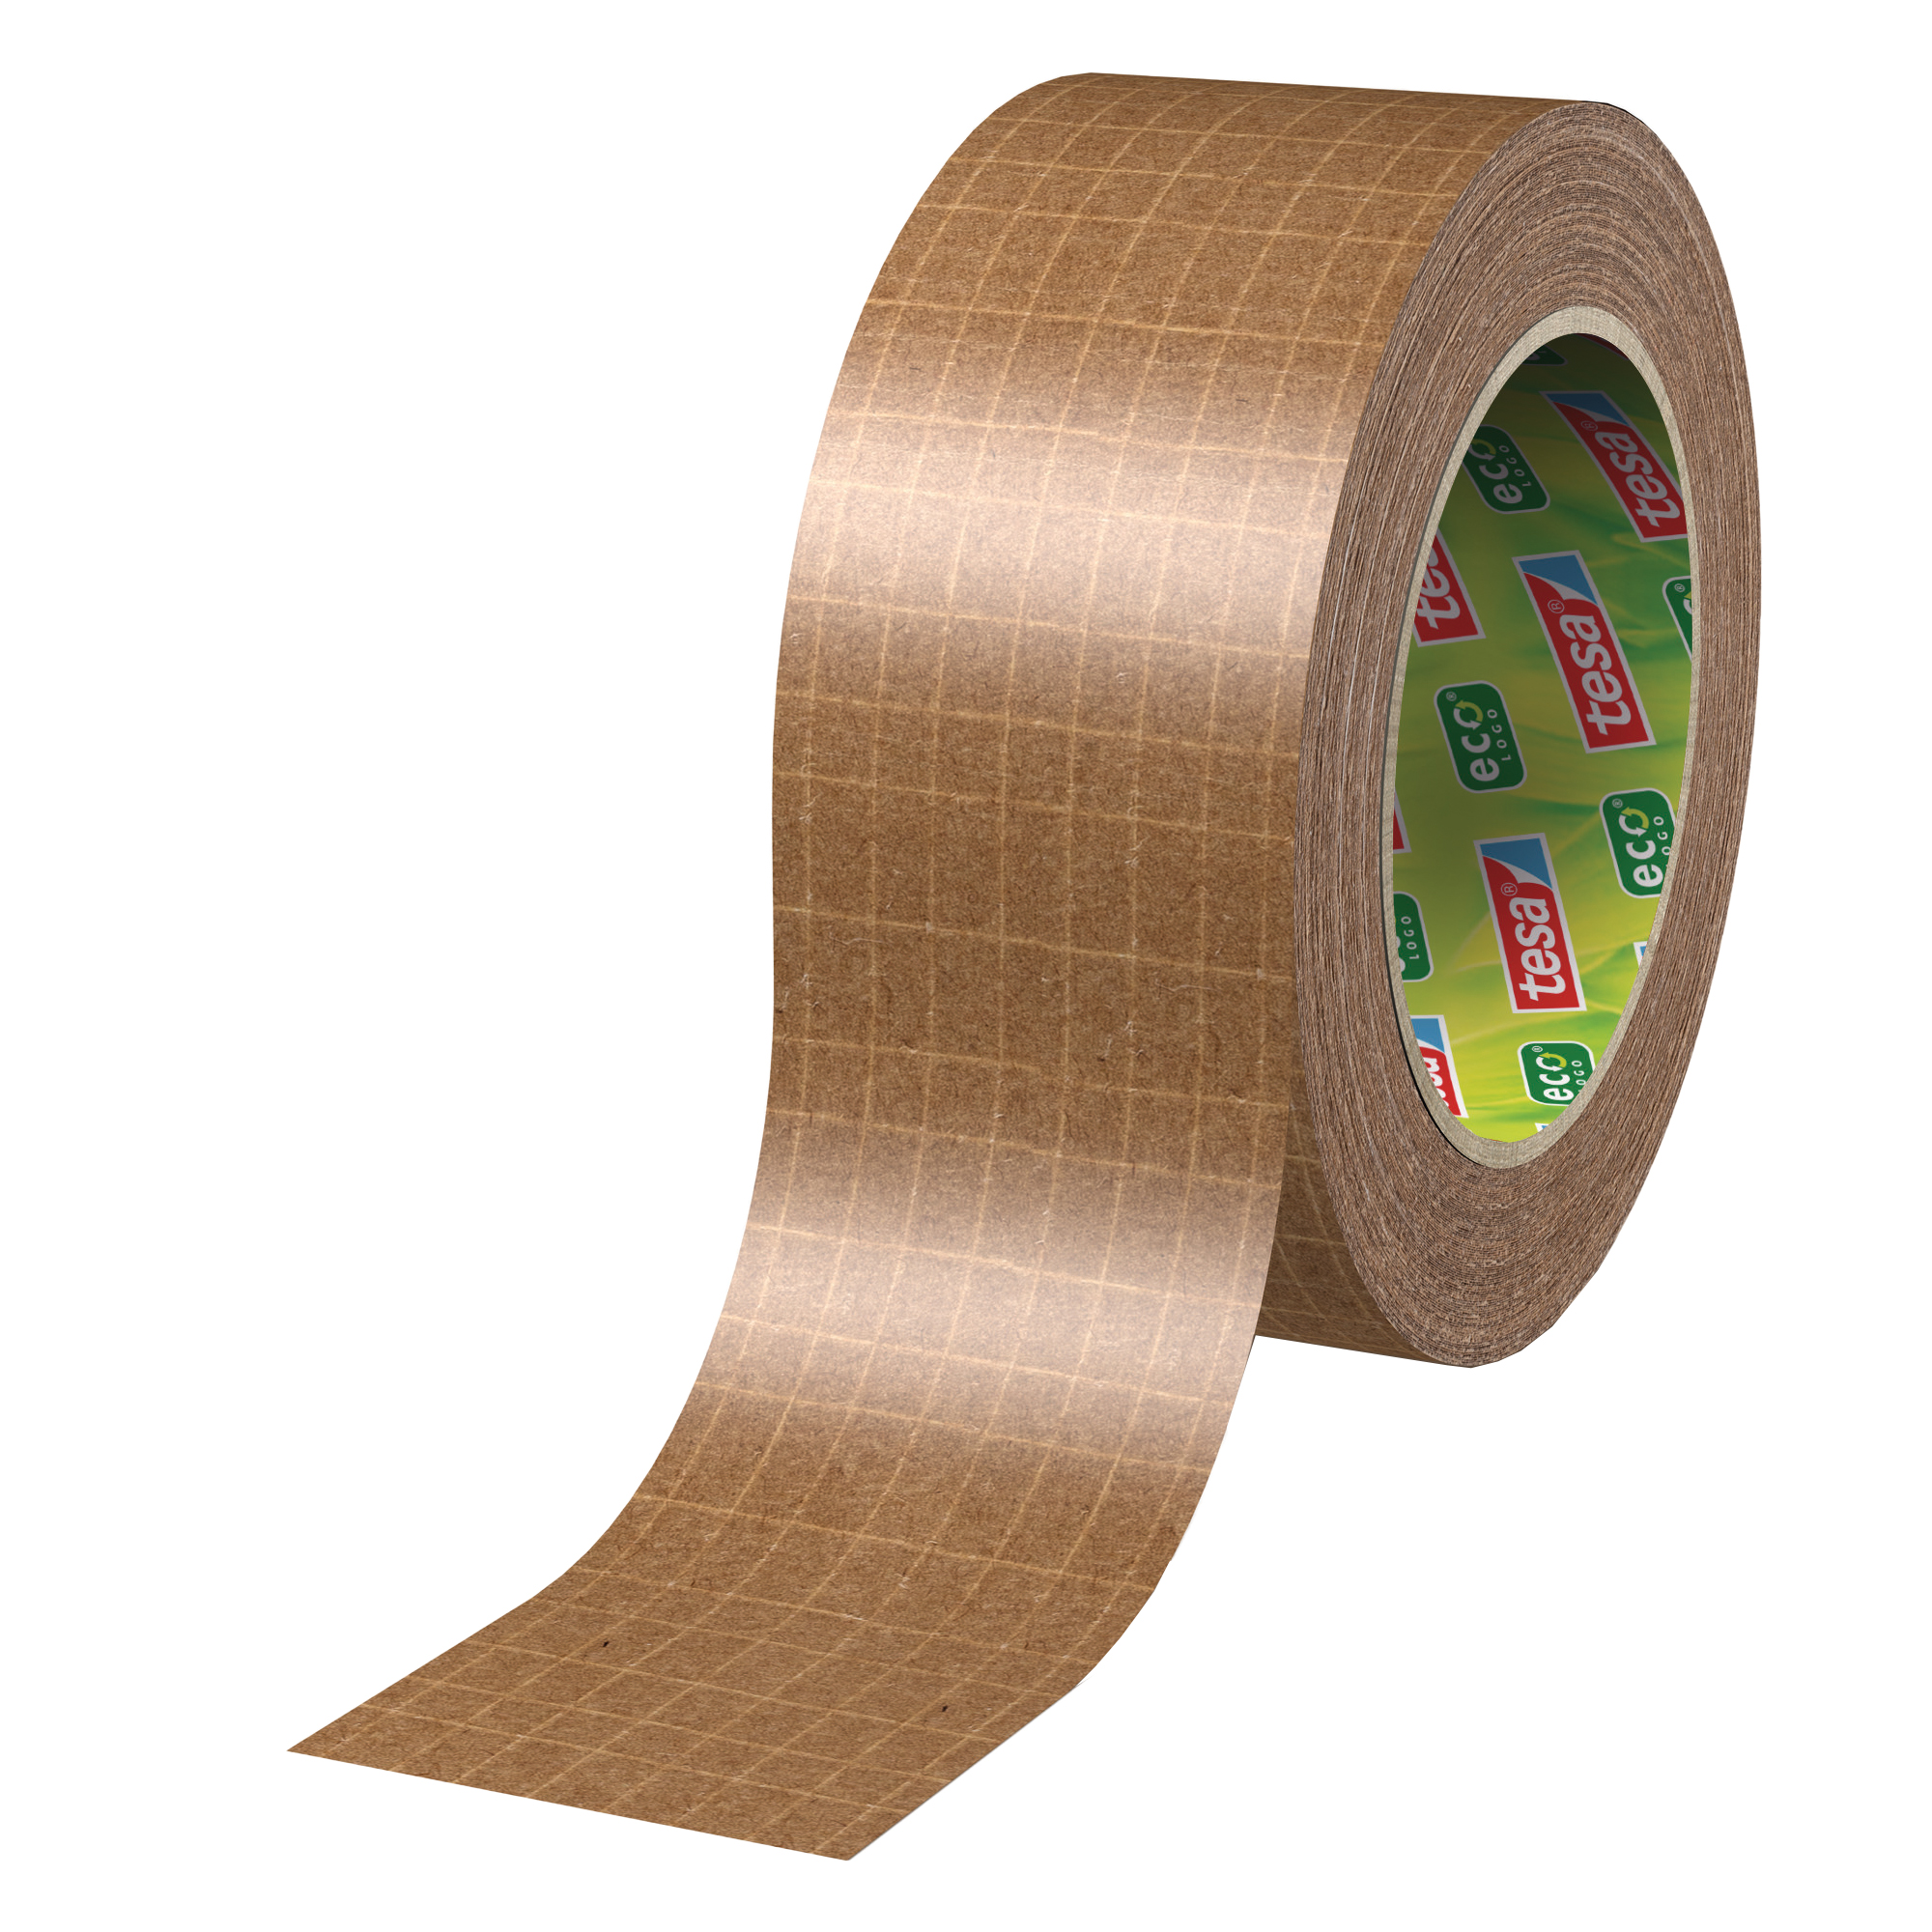 Nastro adesivo Tesapack Eco - paper standard ecoLogo - 50 m x 50 mm - avana - Tesa